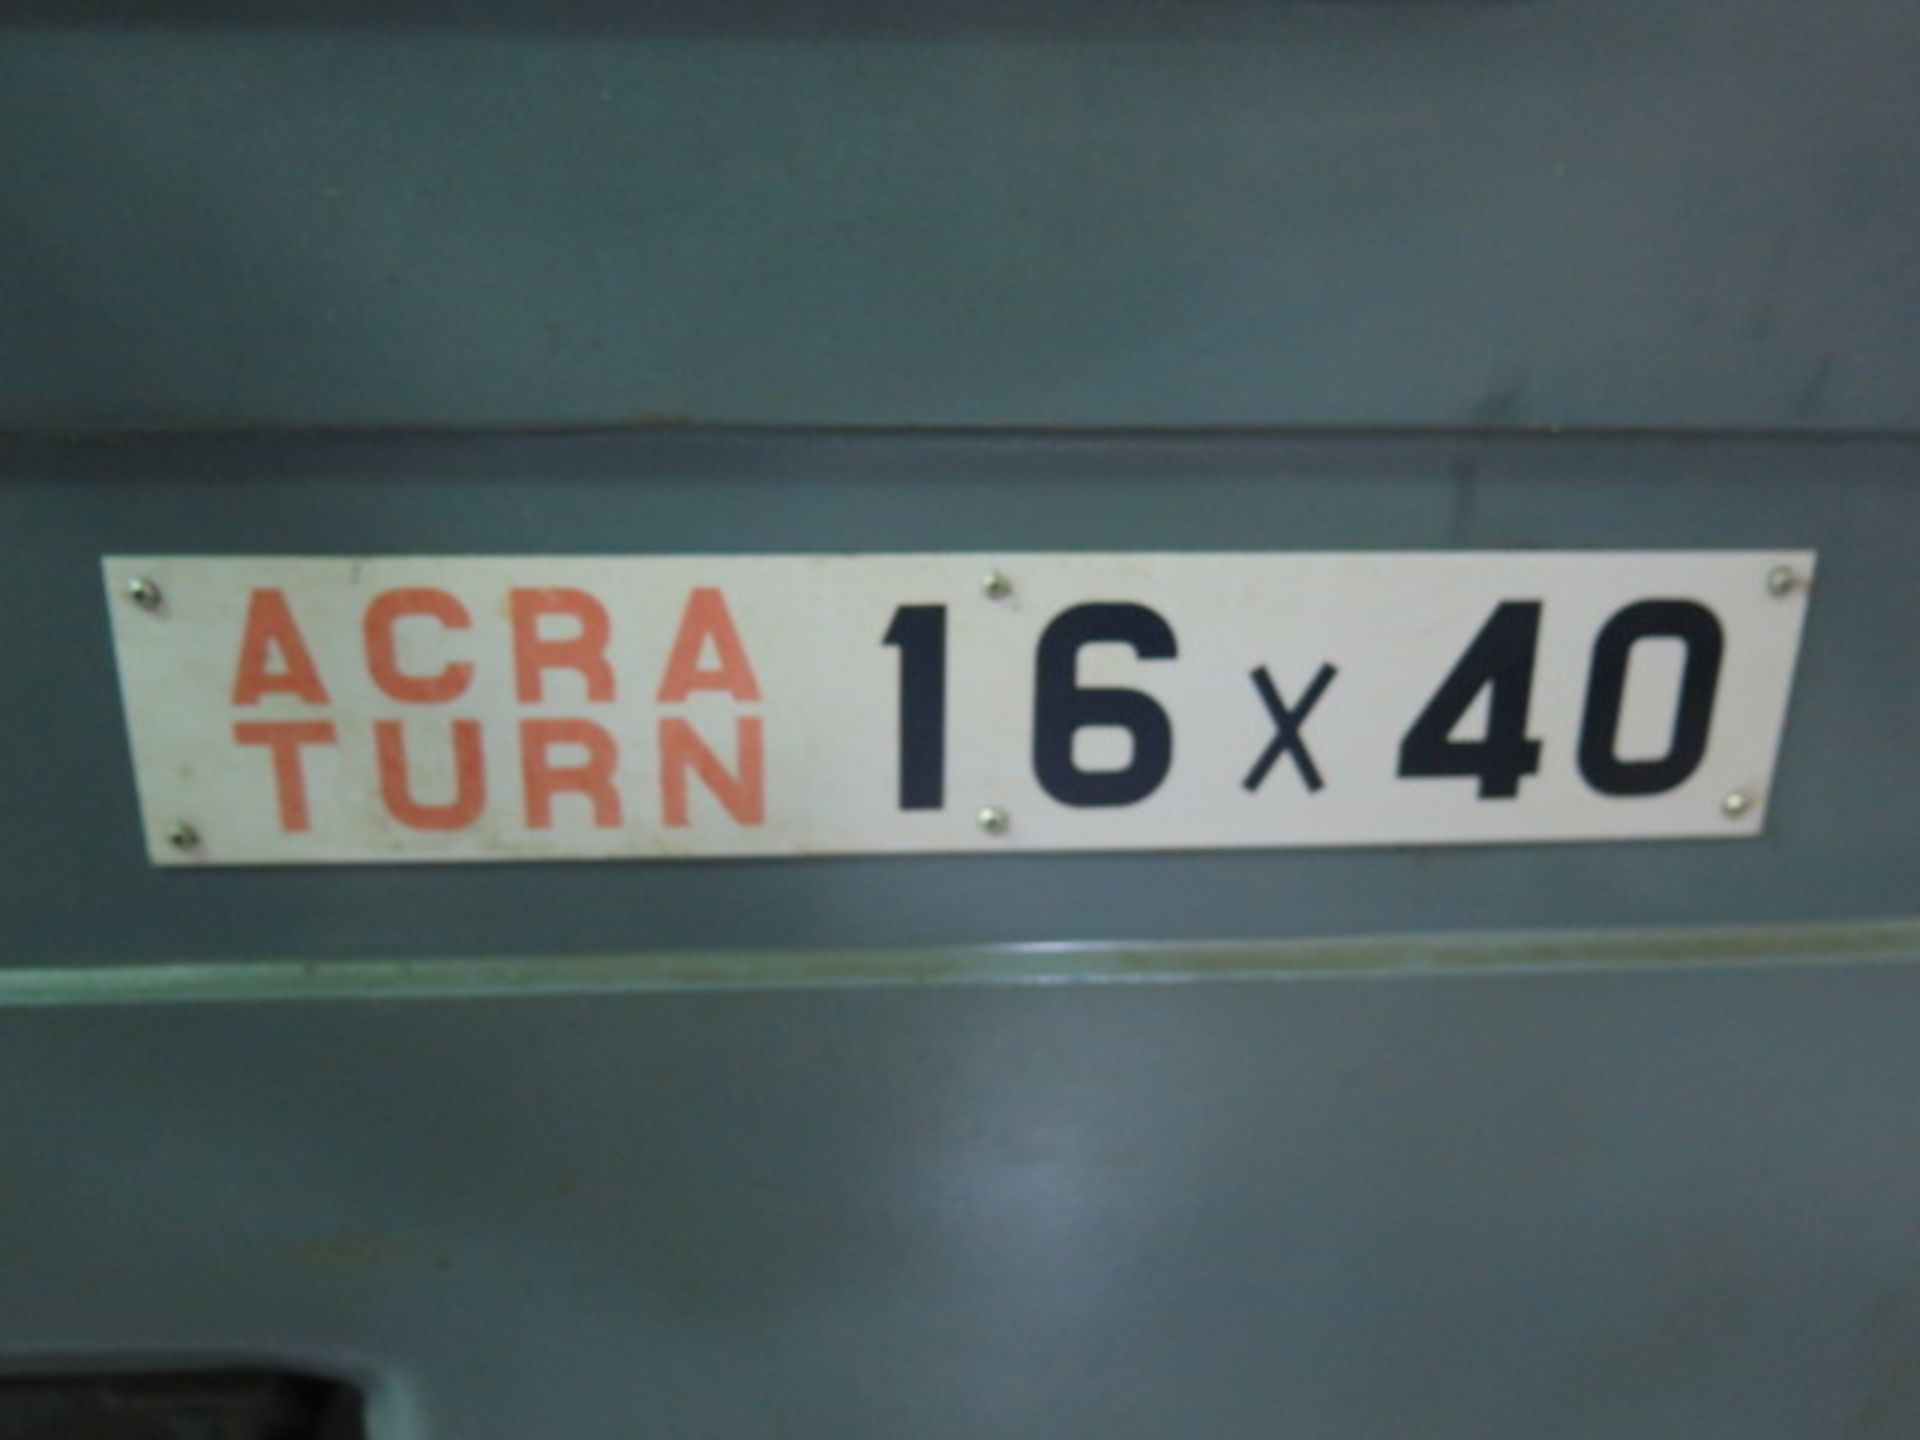 Acra Turn 16x40 16” x 40” Geared Head Lathe s/n 5010 w/ Sony DRO, 23-1800 RPM, Inch/mm Threading, - Image 11 of 11